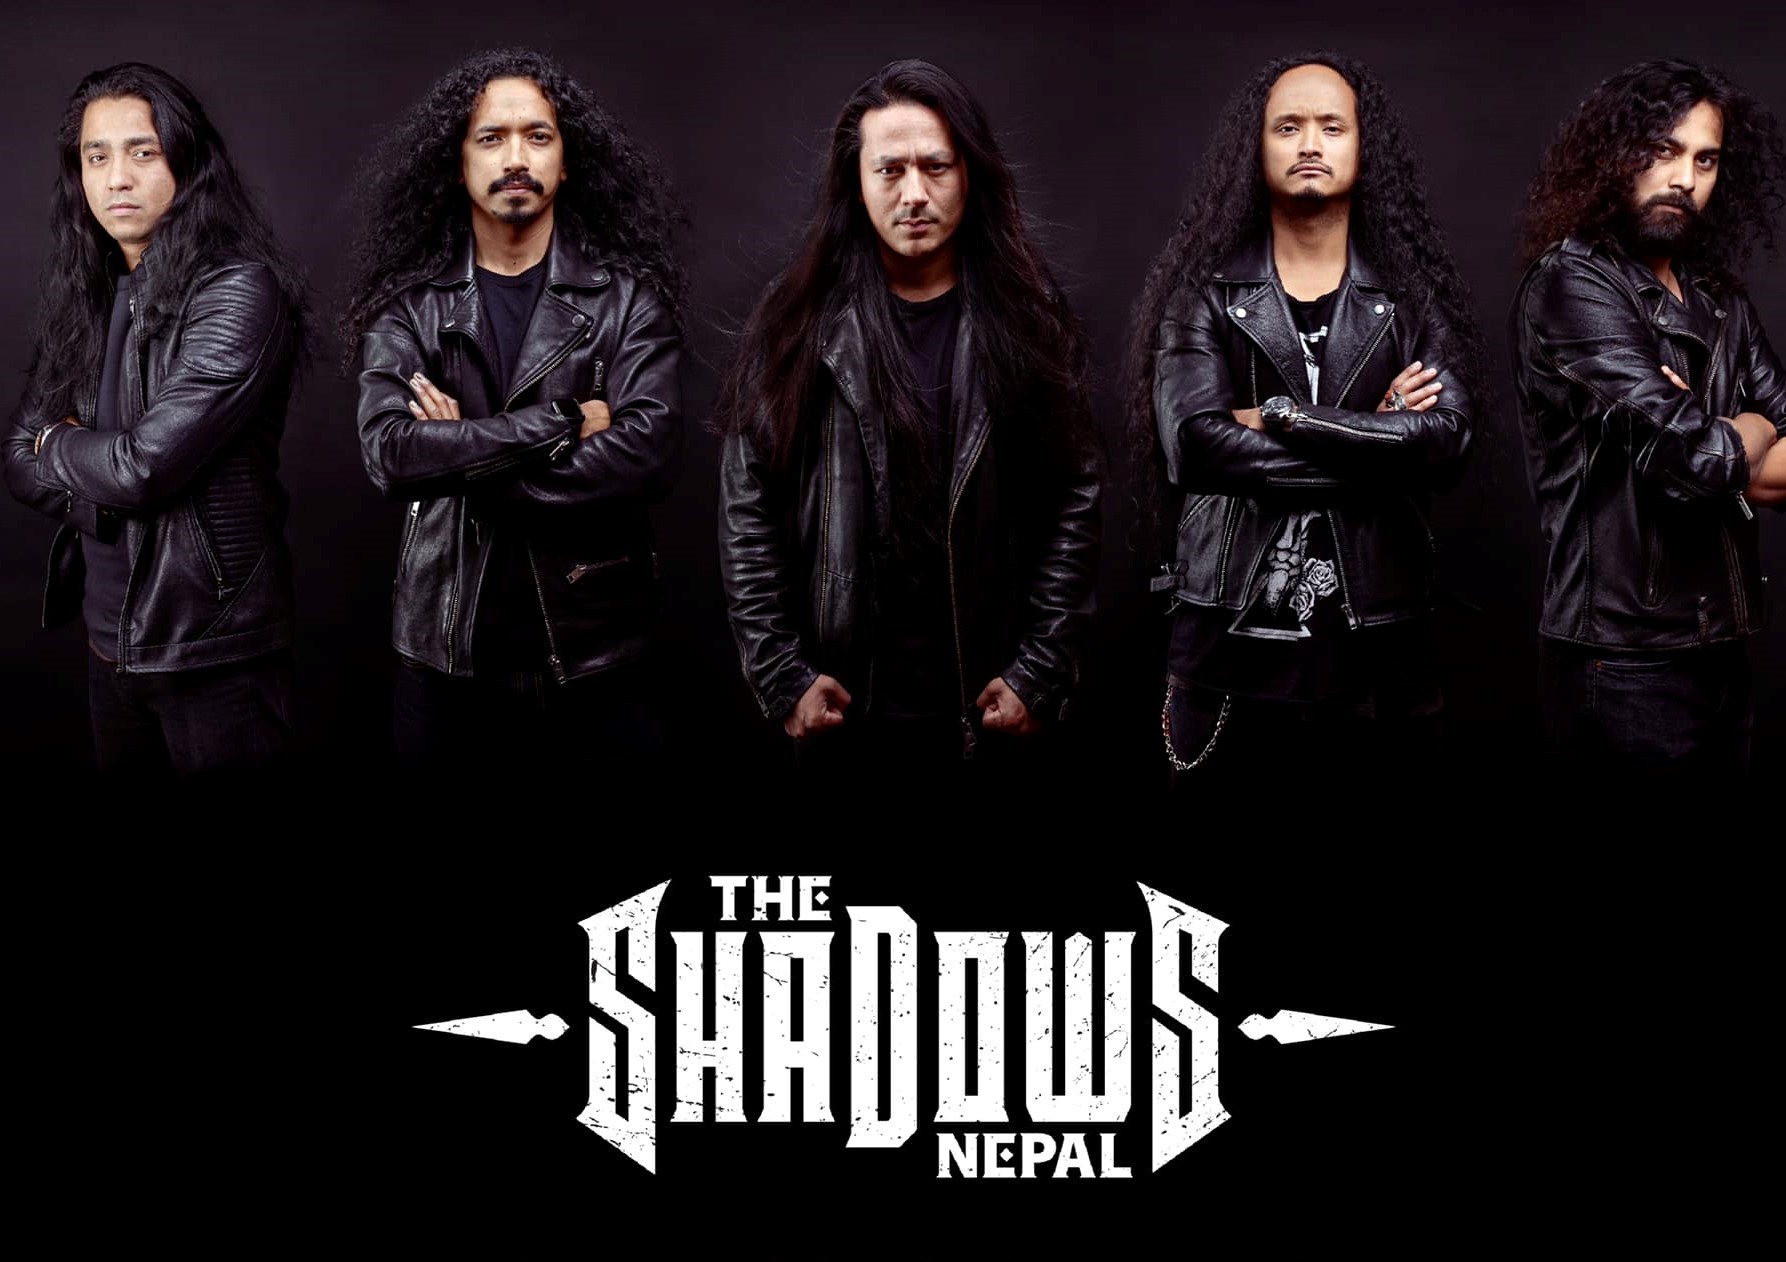 The Shadows Nepal. Image: Facebook/The Shadows Nepal.